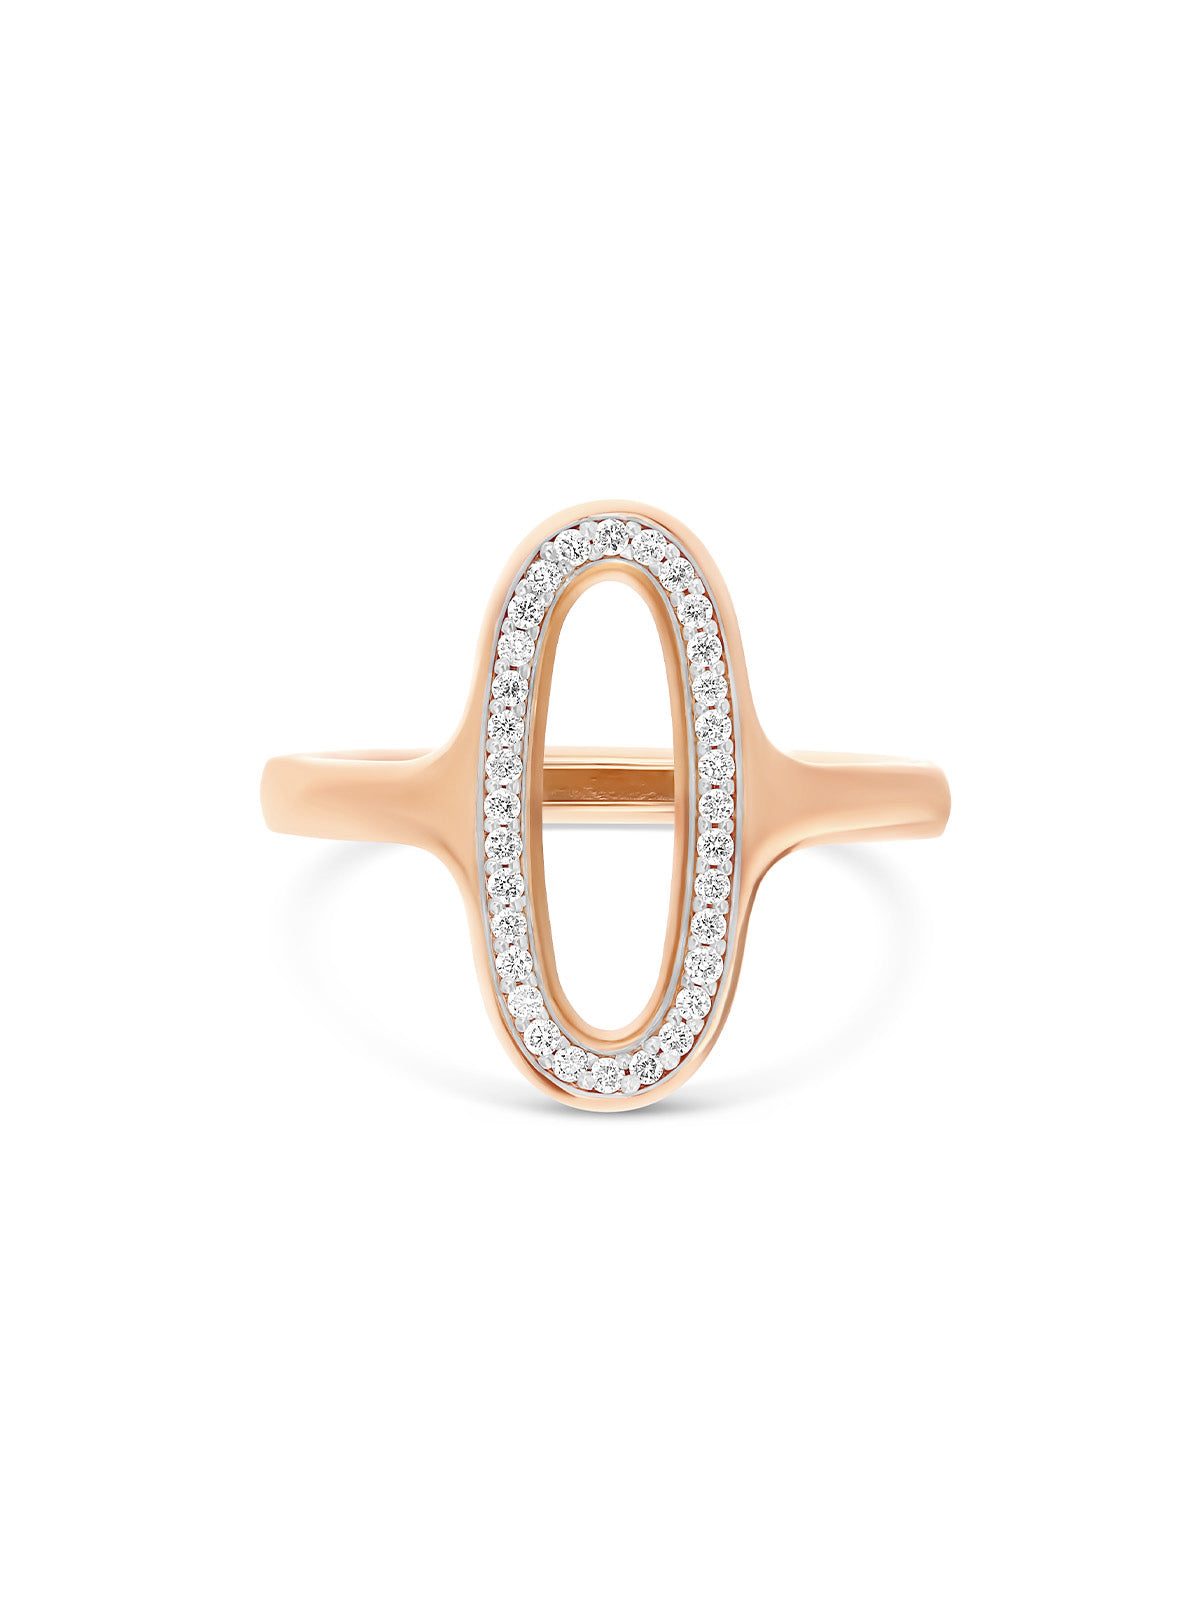 Libera rose gold and diamonds oval signet ring